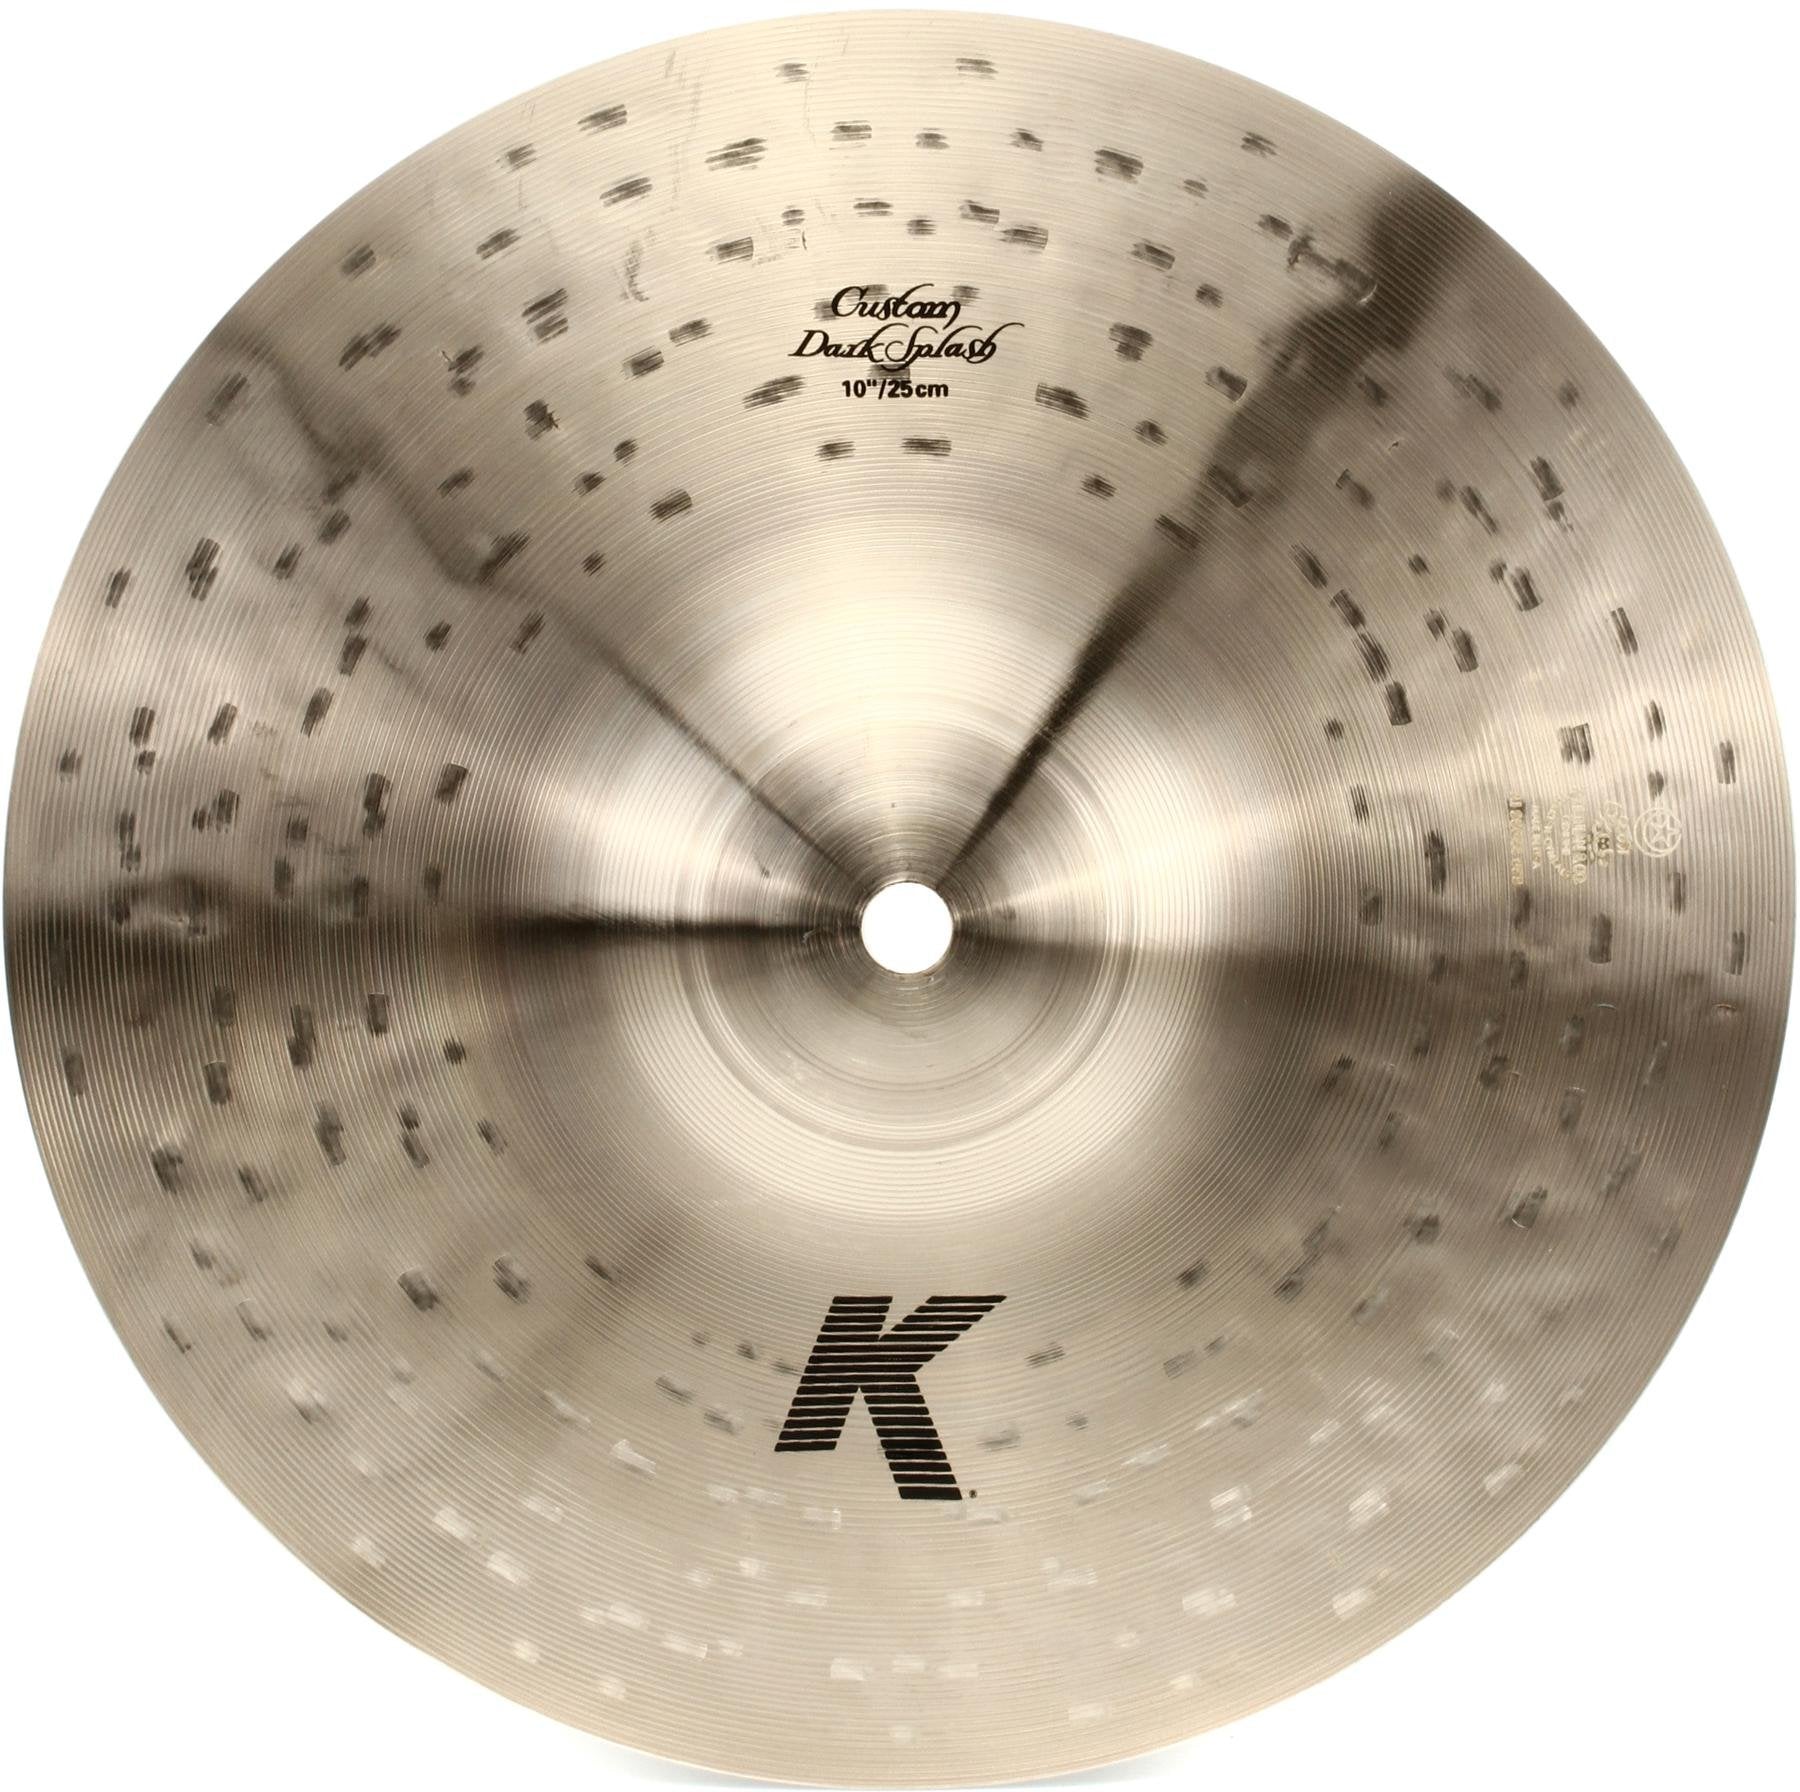 ZILDJIAN K Custom Dark Splash Cymbal (Available in various sizes)